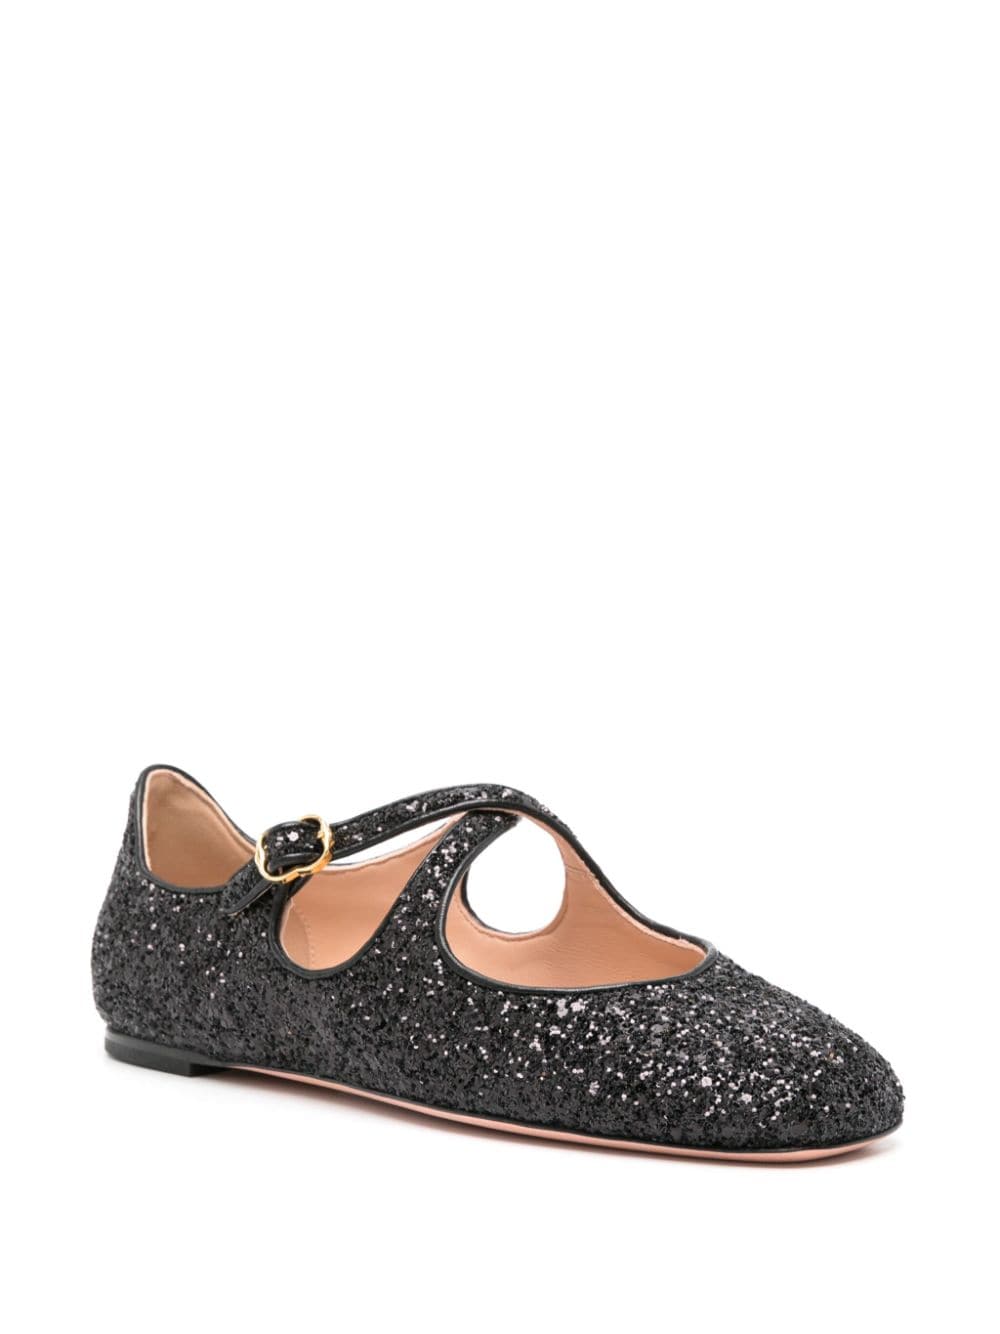 Image 2 of Bally Byntia glittered ballerina shoes